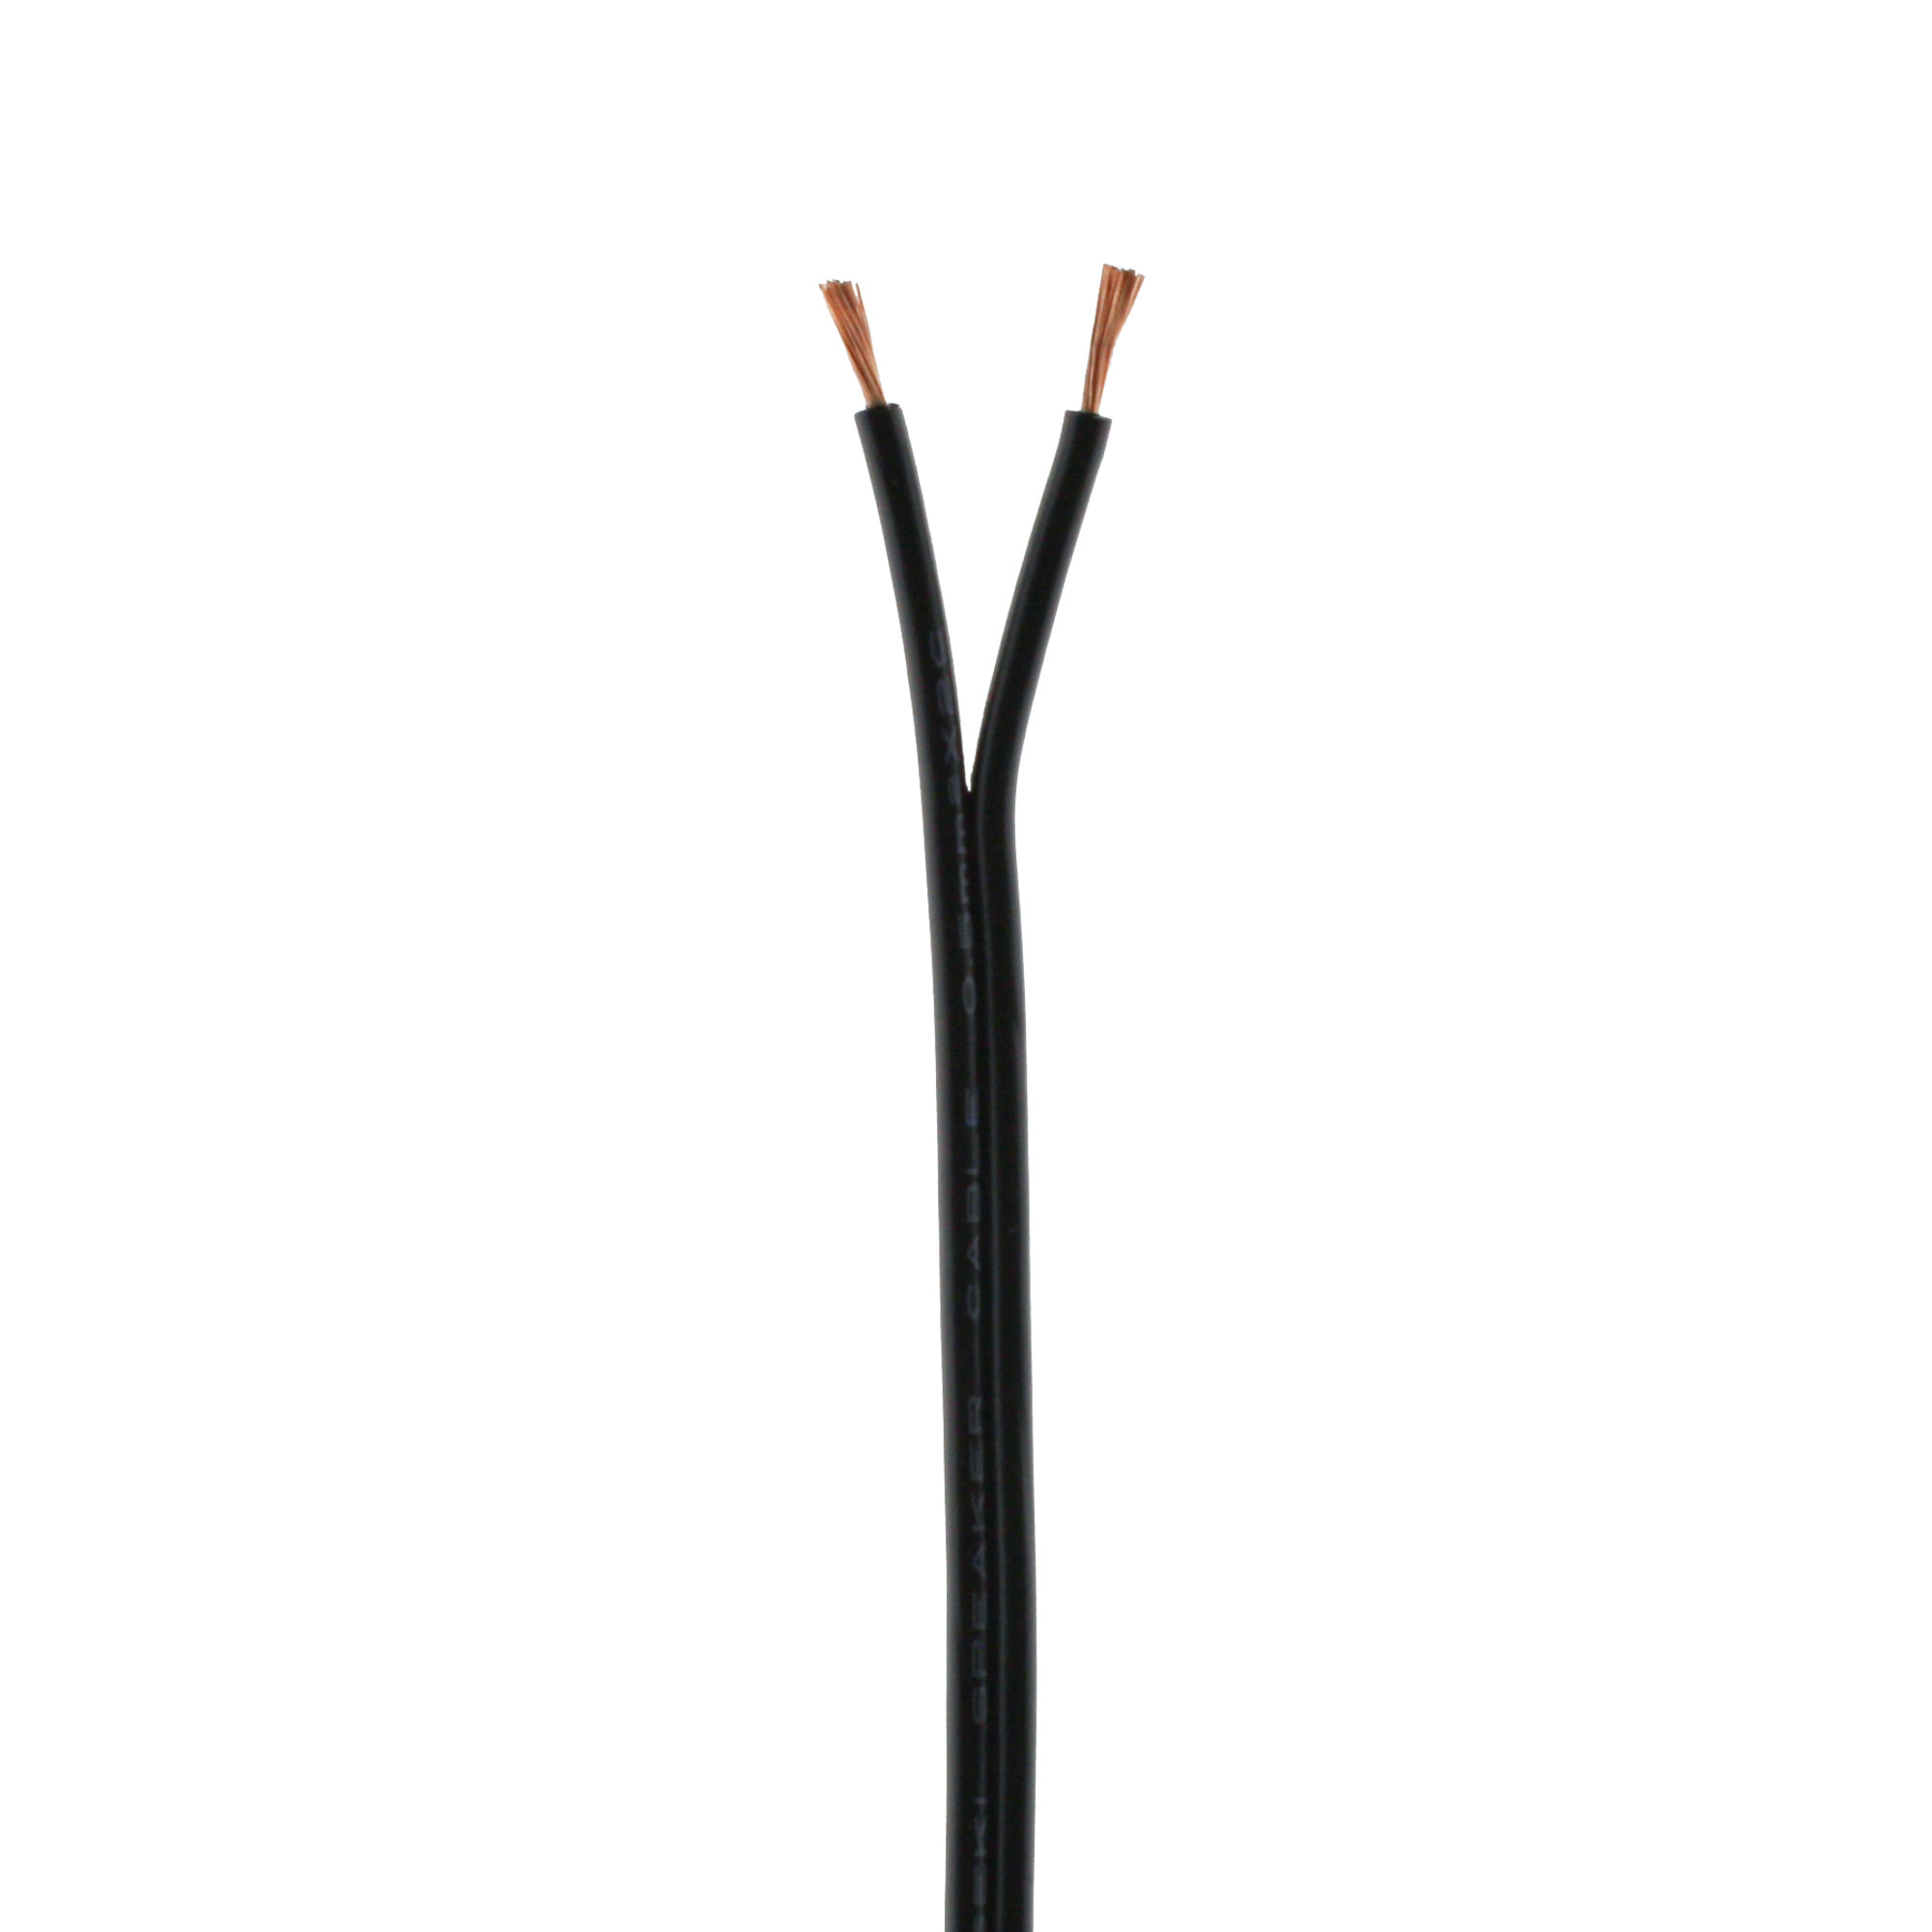 Loudspeaker cable black 25m 0.75mm